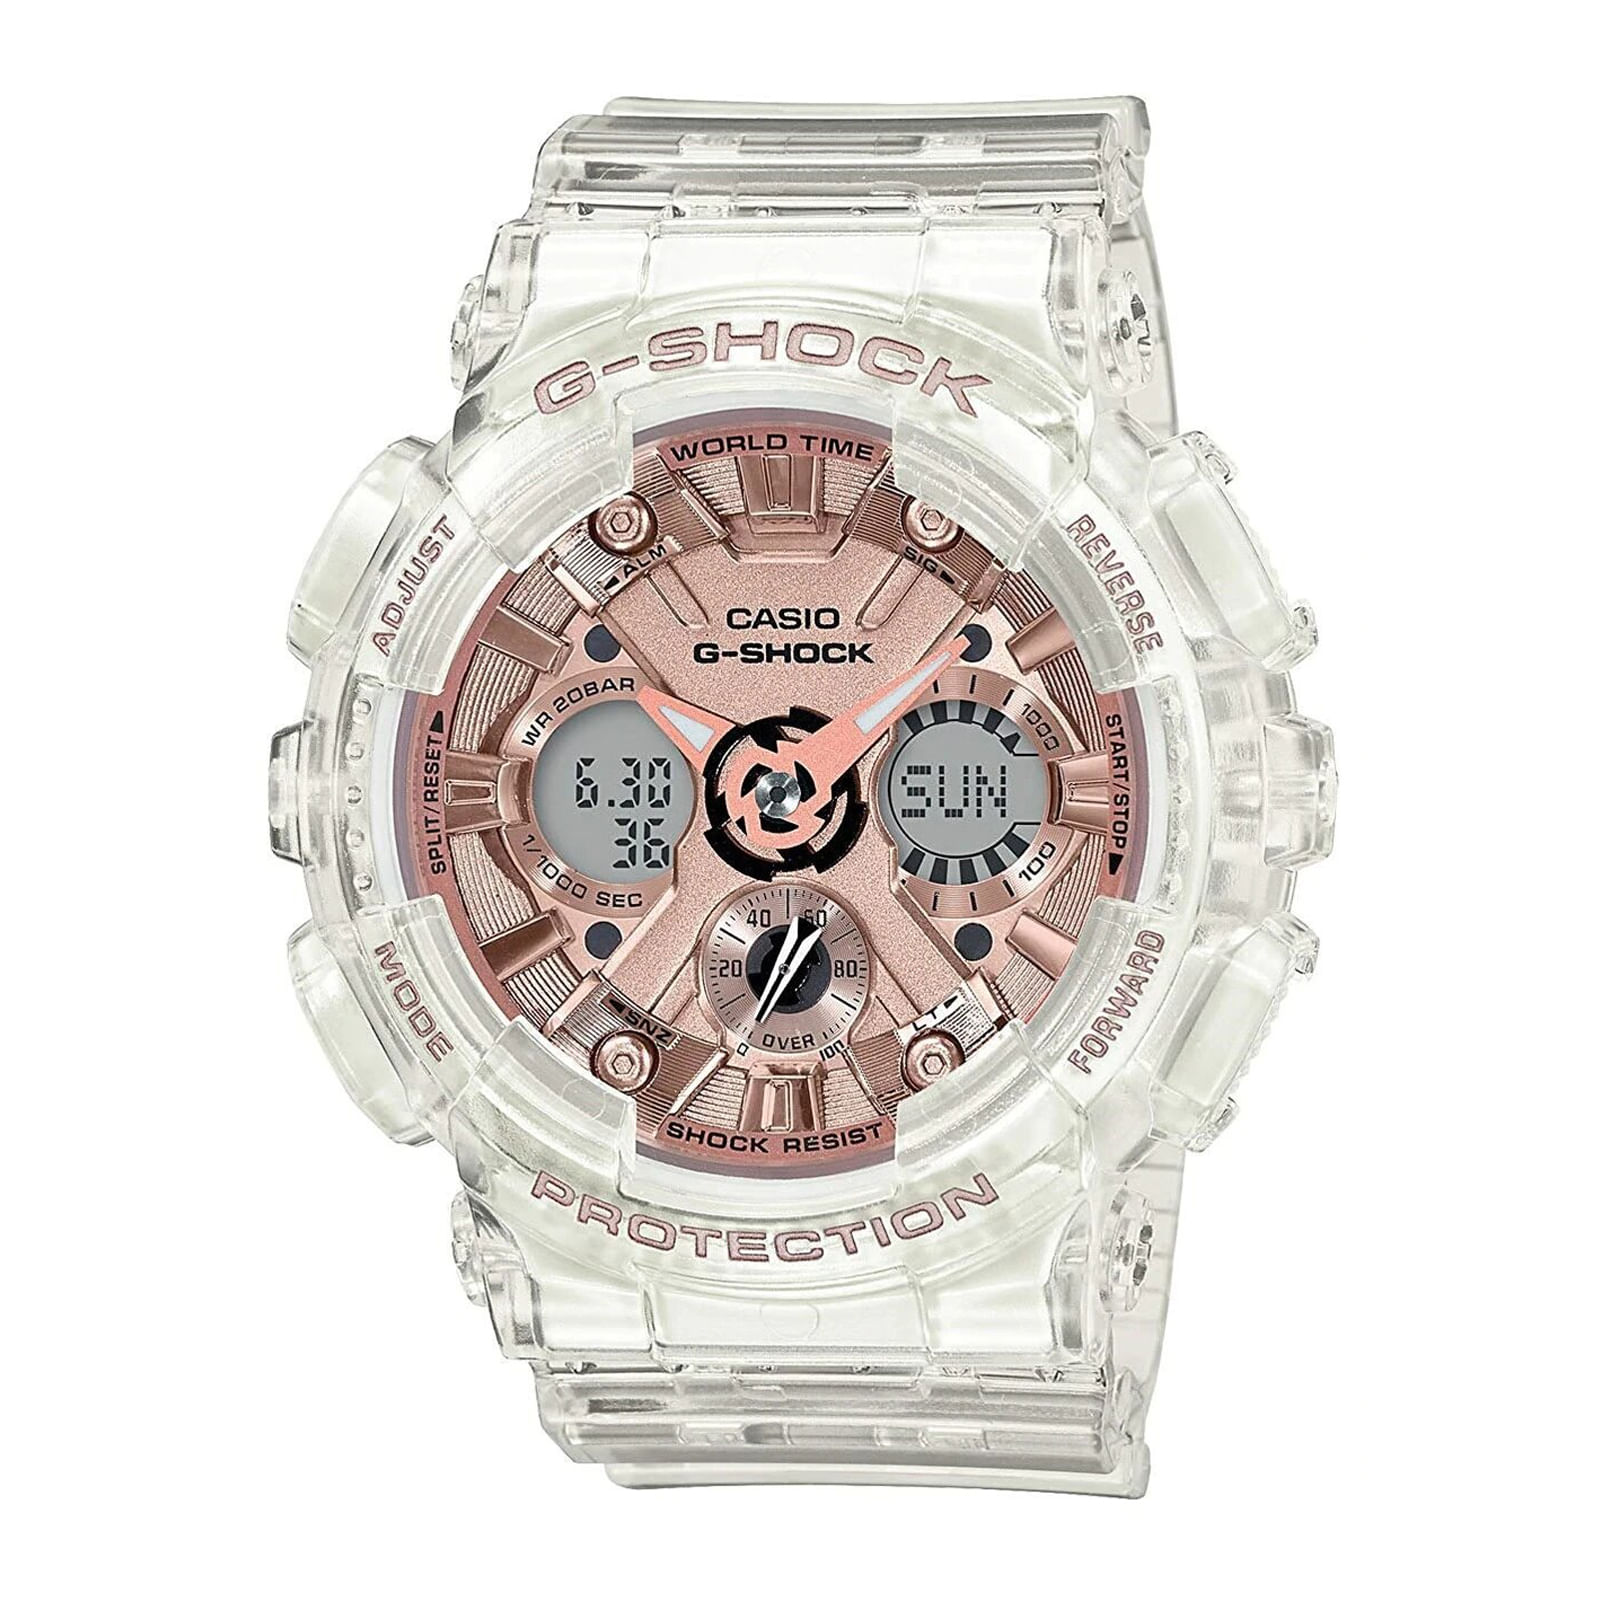 Reloj G-SHOCK GMA-S120SR-7A Resina Mujer Transparente